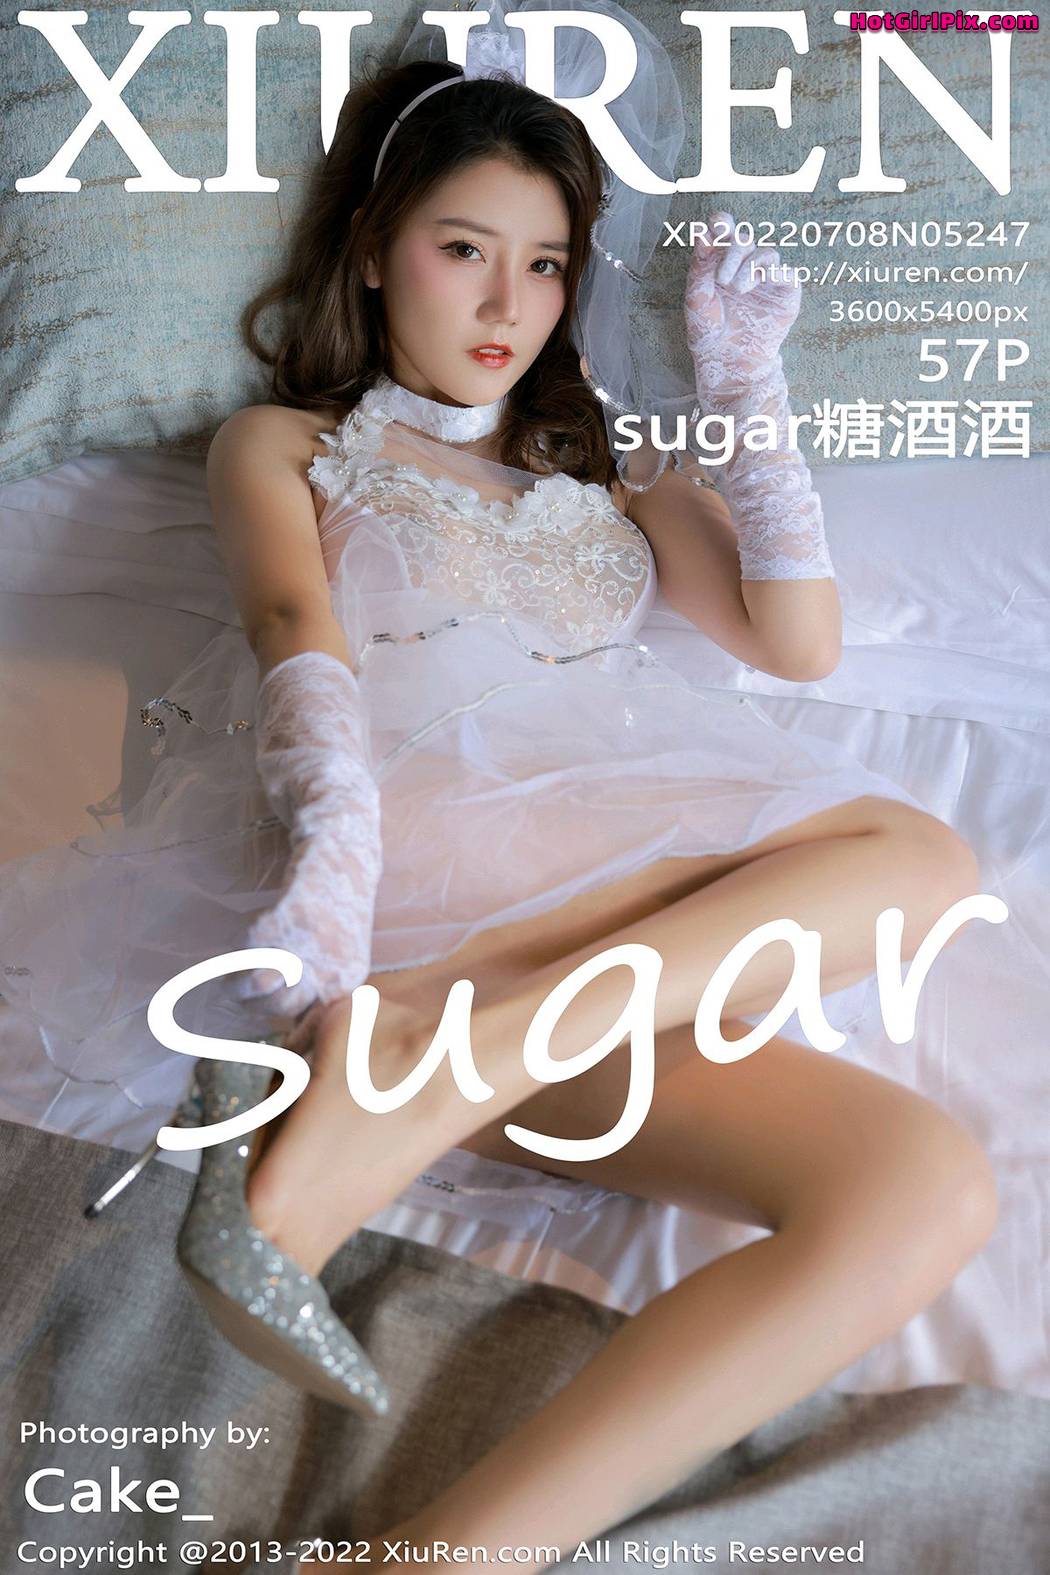 [XIUREN] No.5247 Sugar糖酒酒 Cover Photo